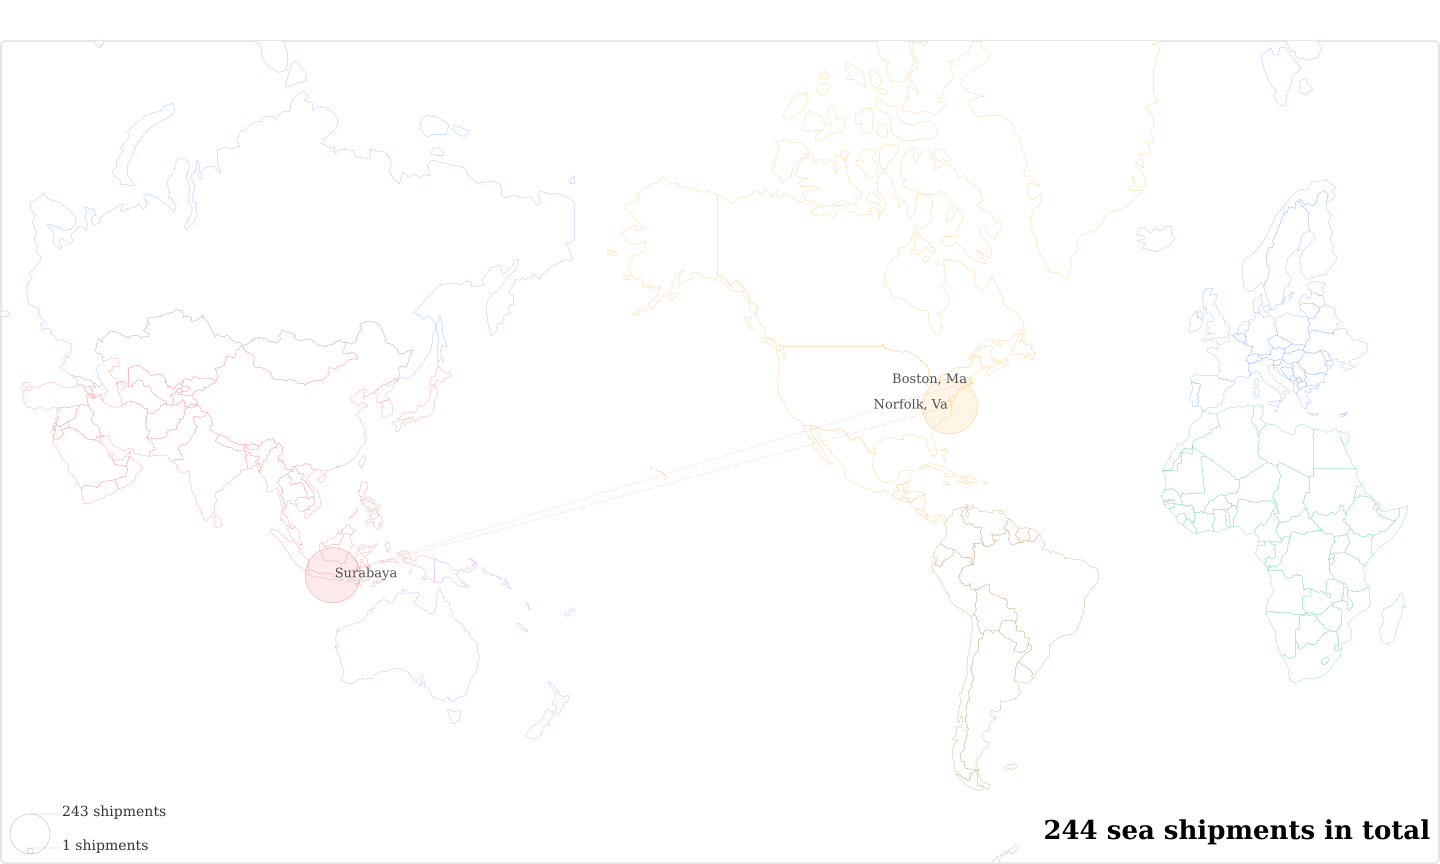 Bumi Menara Internusa Jl Margamulyo's Imports Per Country Map